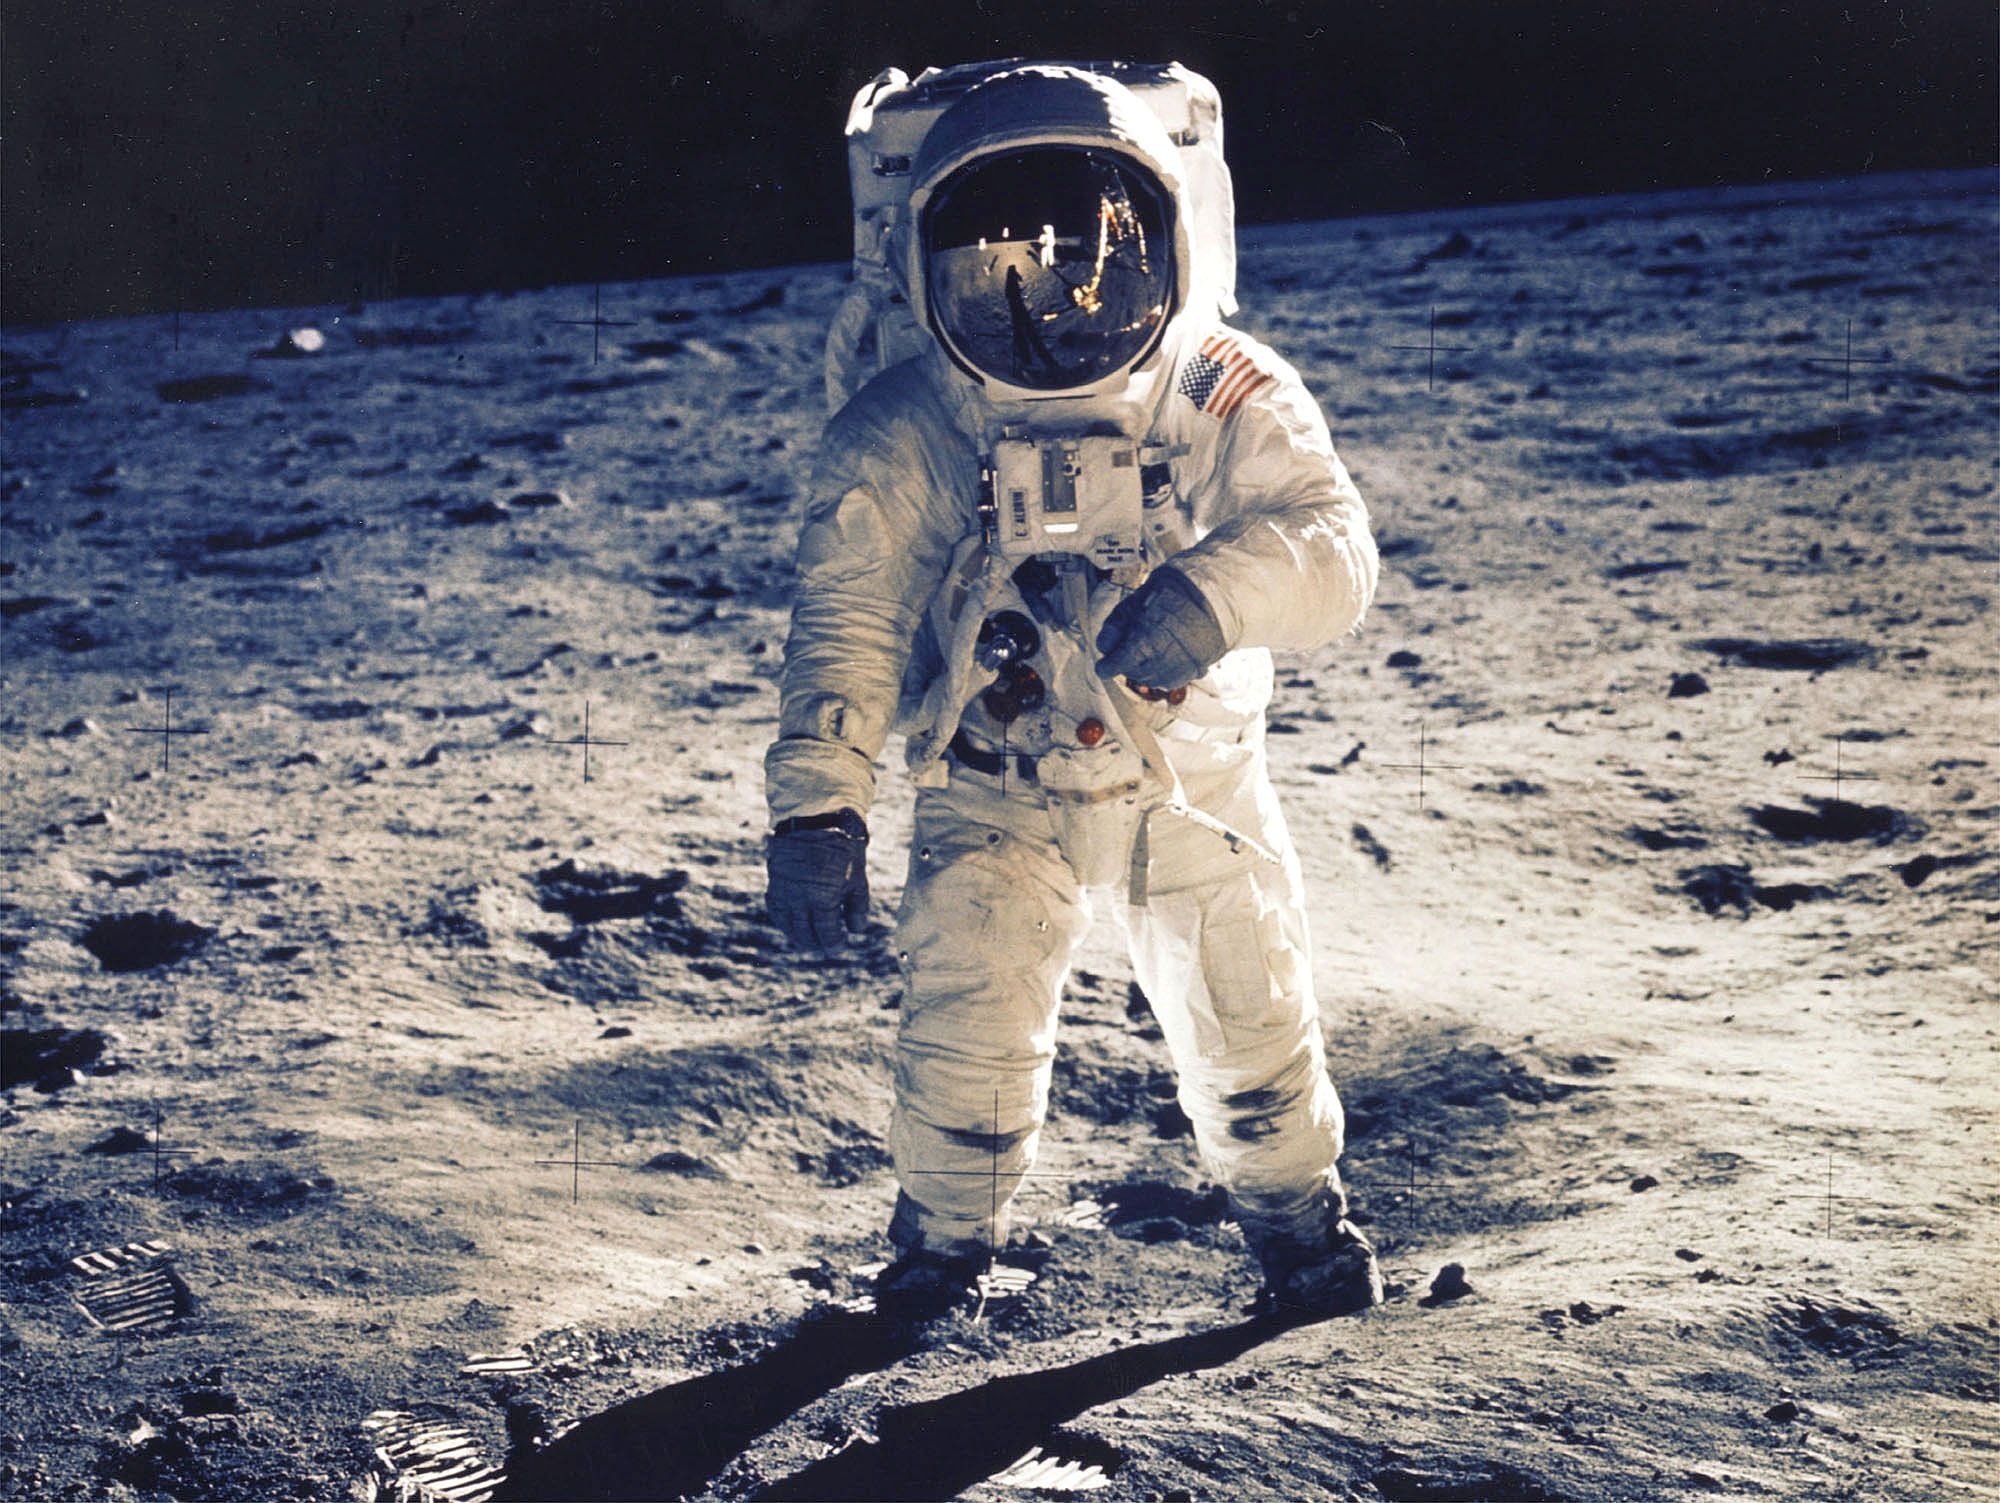 Astronaut Edwin E. "Buzz" Aldrin Jr. on the moon